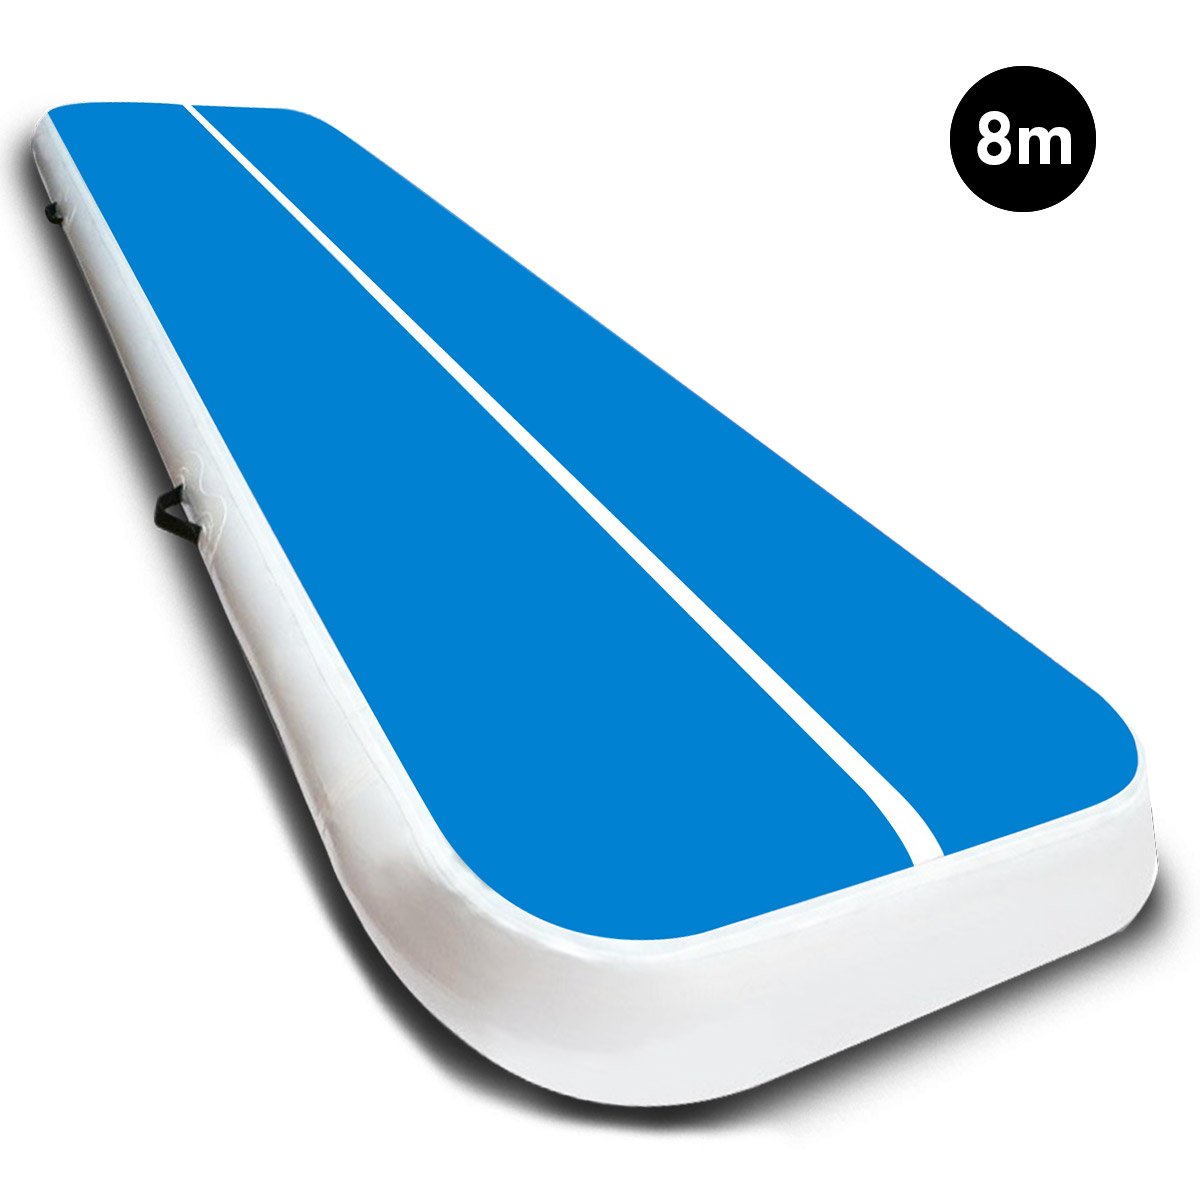 8m x 1m Air Track Inflatable Tumbling Gymnastics Mat - Blue White 2